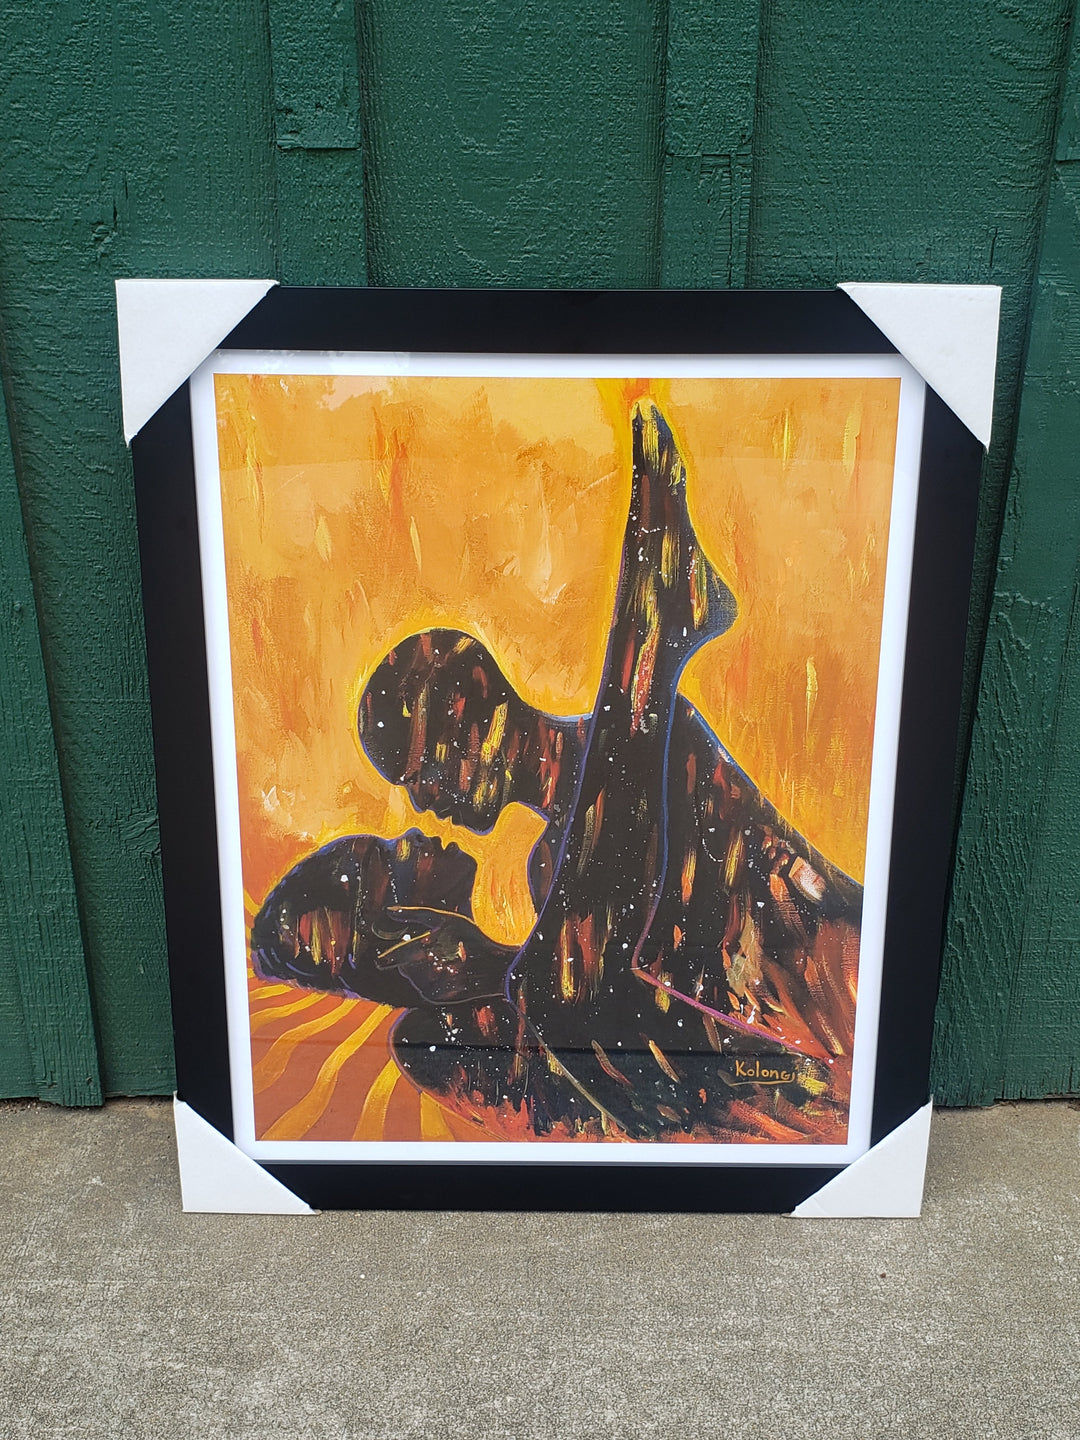 Fire and Desire-Art-Kolongi Brathwaite-28x22 inches-Black Frame-The Black Art Depot